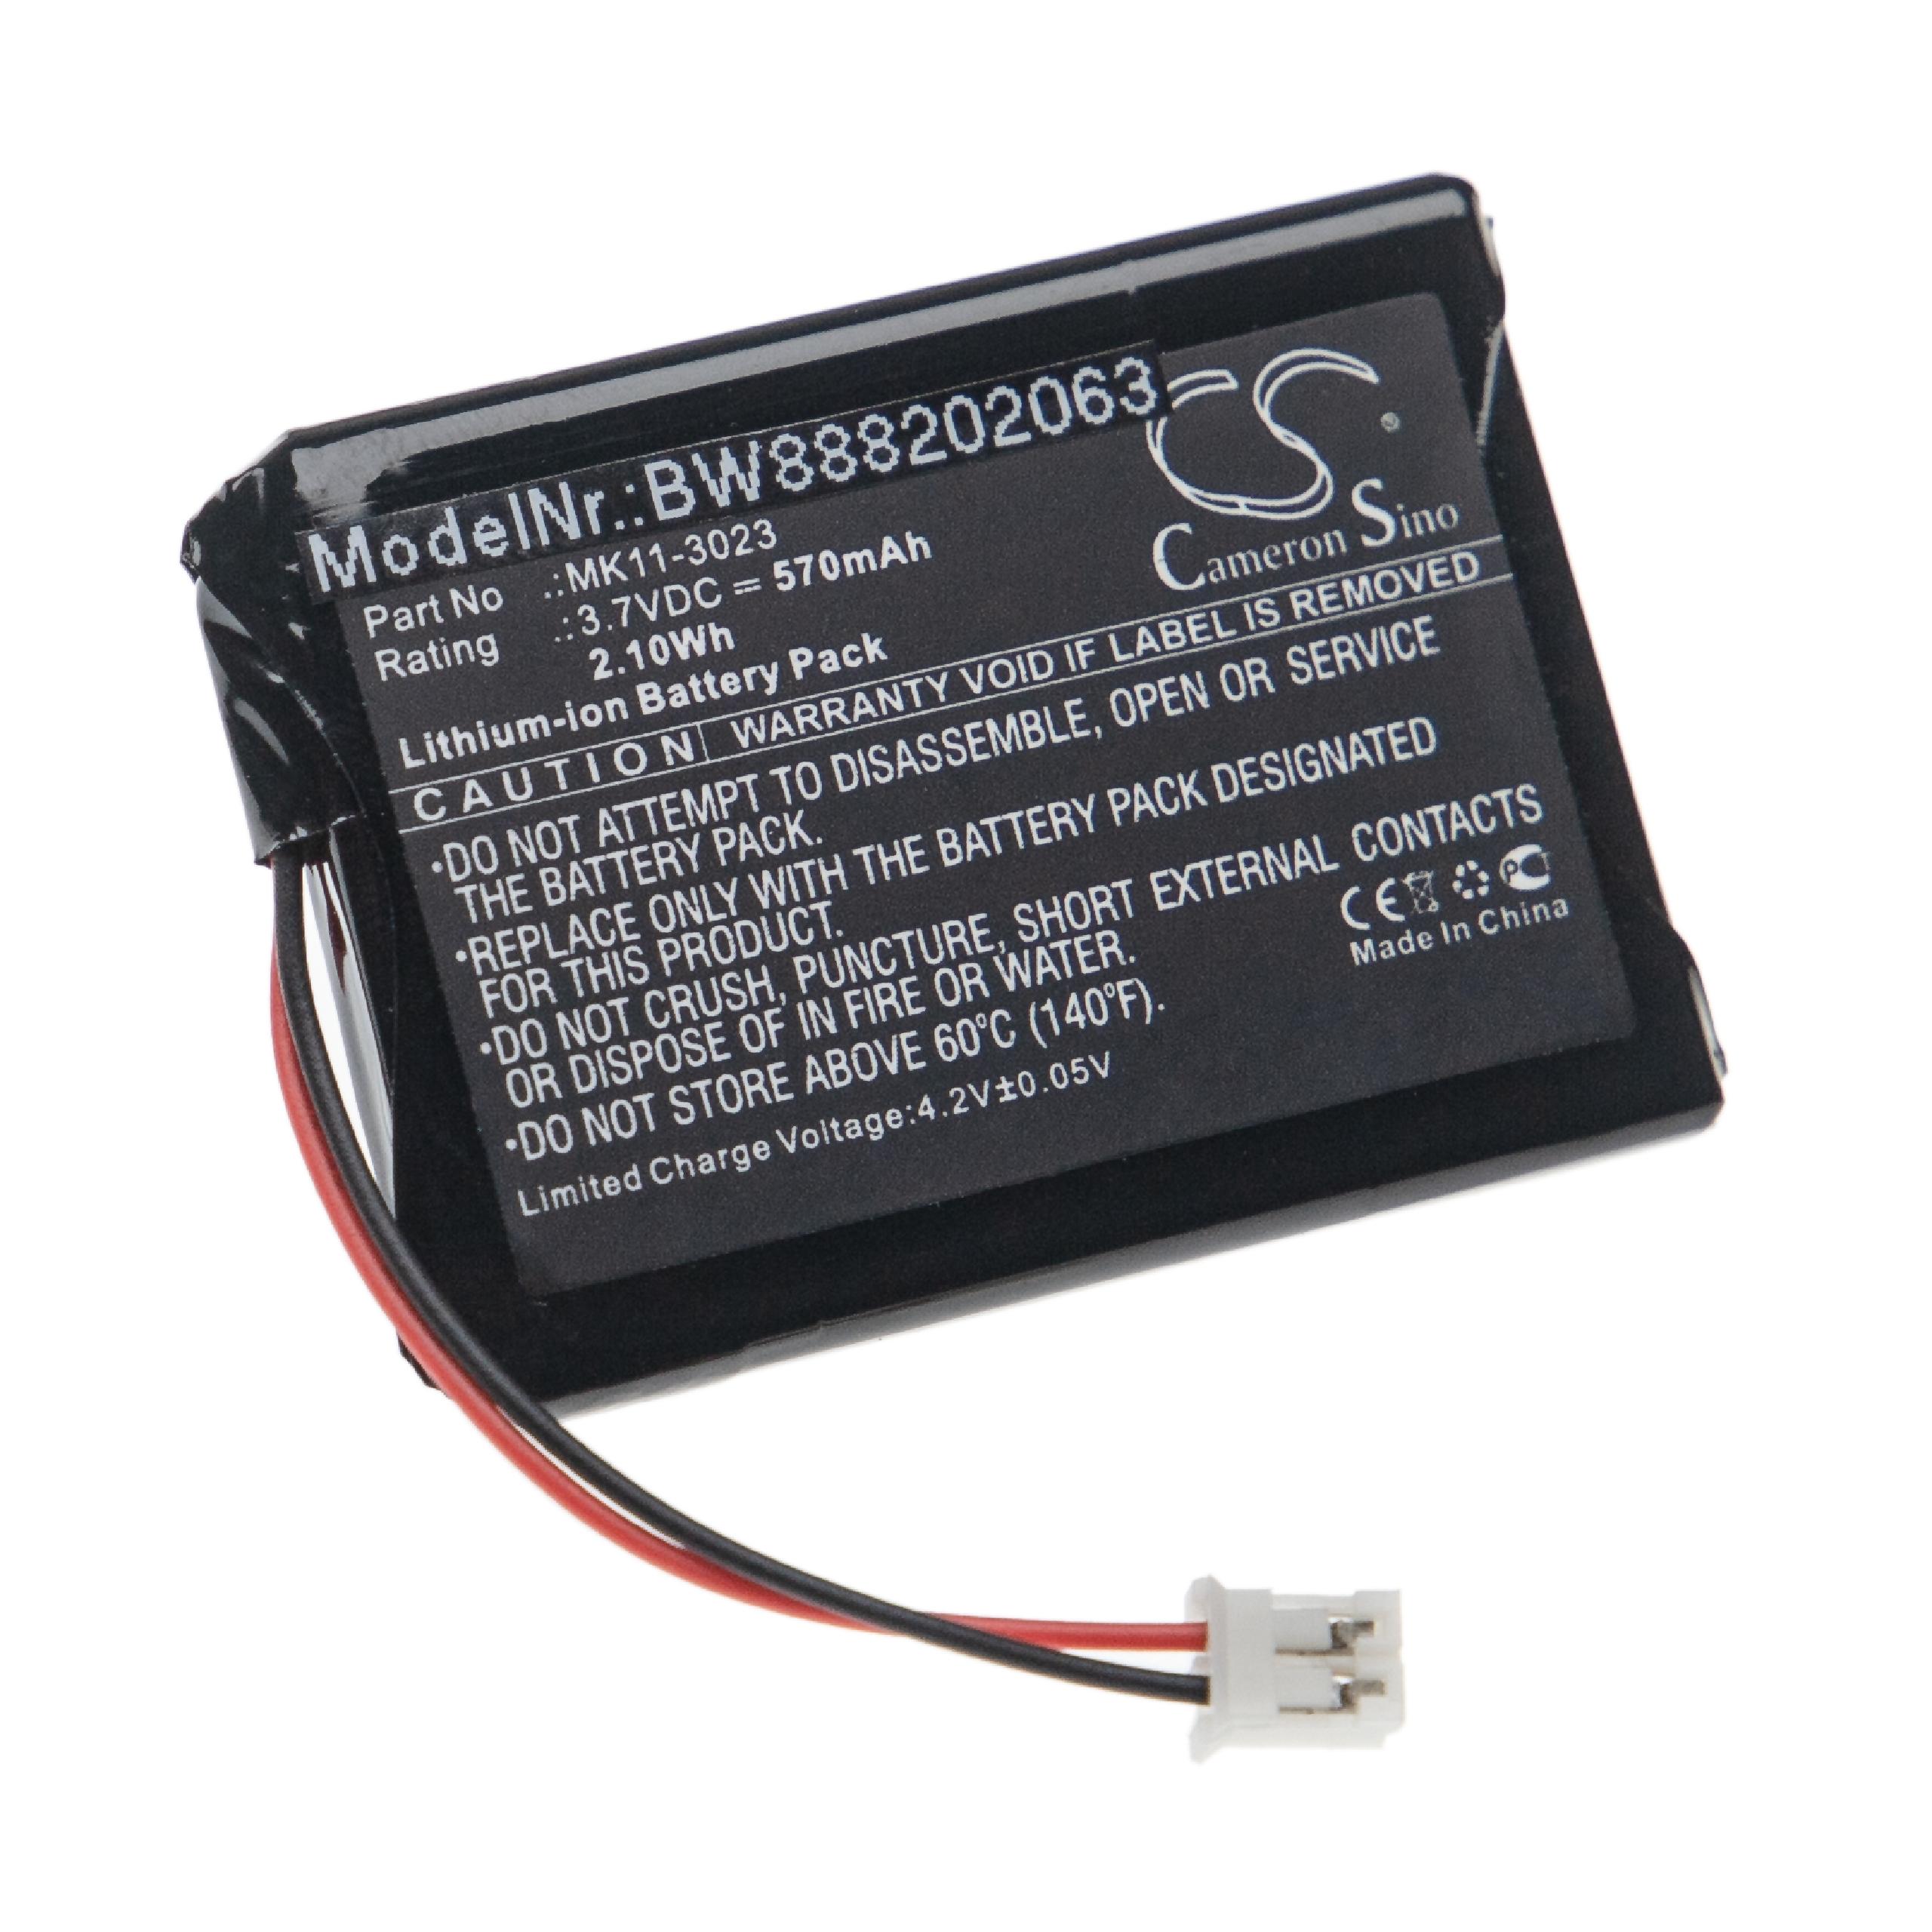 Wireless Keyboard Battery Replacement for Sony MK11-3023, MK11-2903, MK11-2902 - 570mAh 3.7V Li-Ion